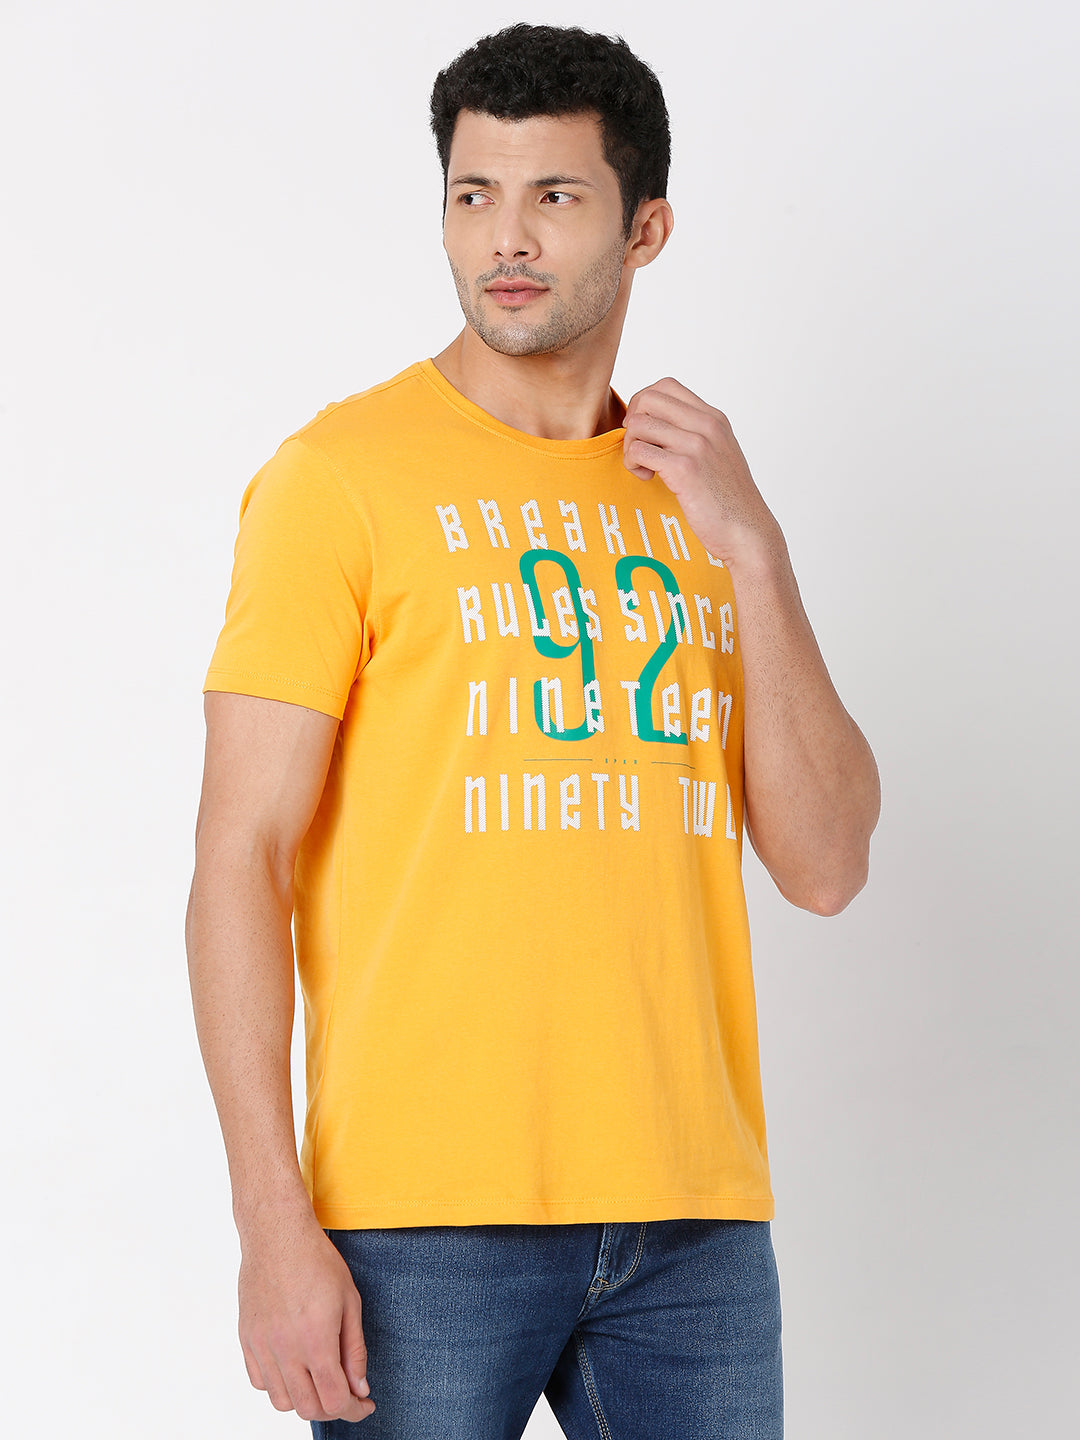 Spykar Gold Yellow Cotton Half Sleeve Printed Casual T-Shirt For Men